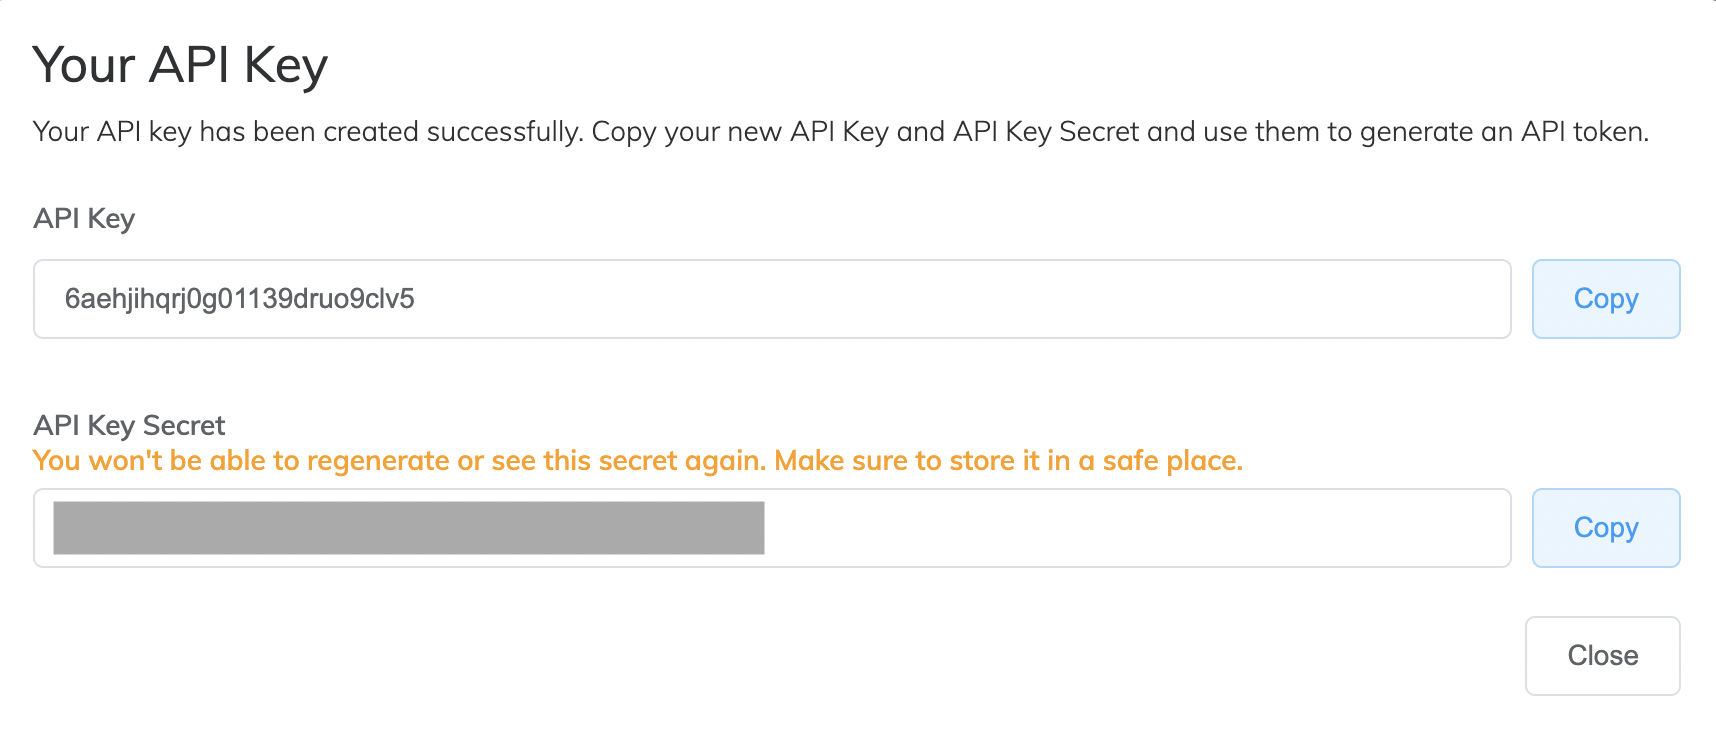 Your API Key prompt